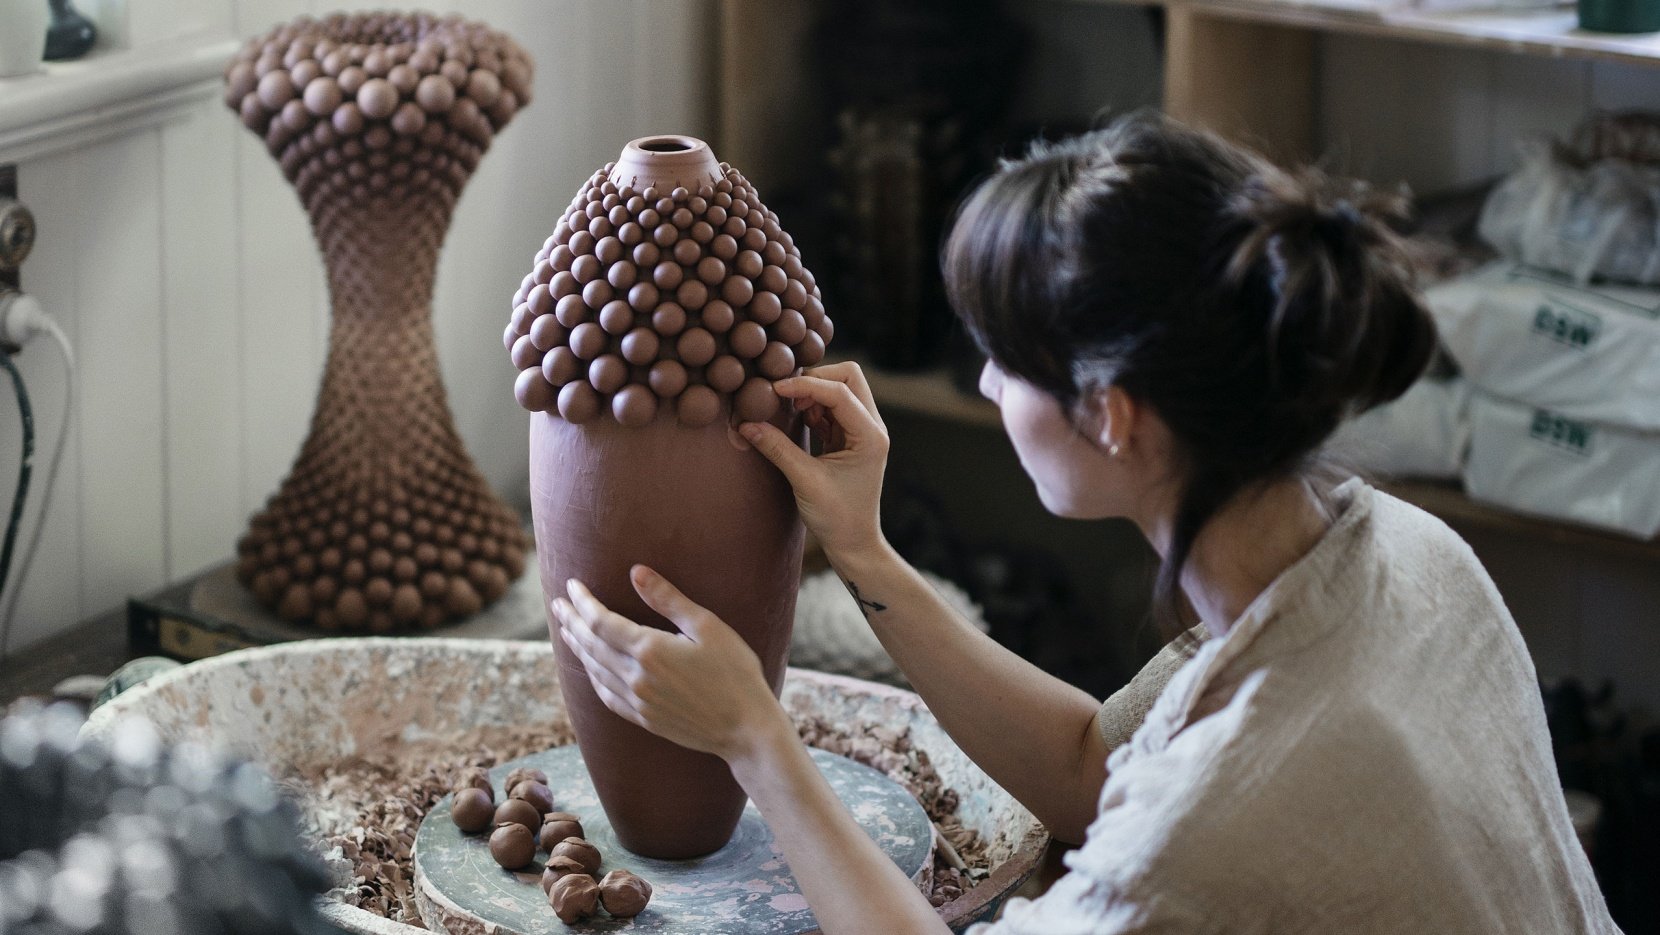 Nicolette johnson - pottery ceramic artists